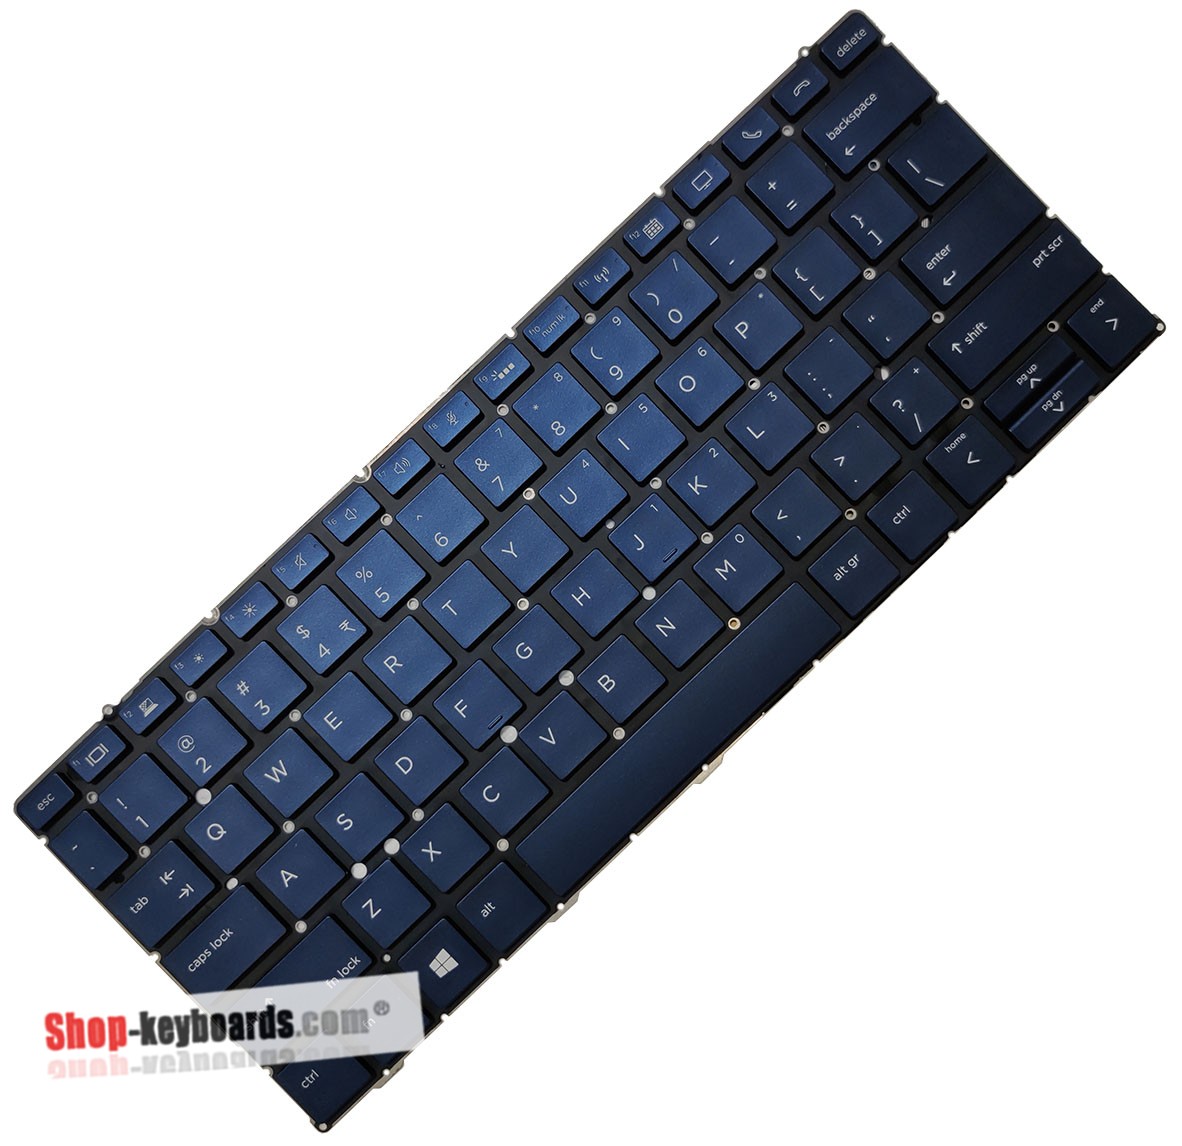 HP SG-99100-2XA Keyboard replacement